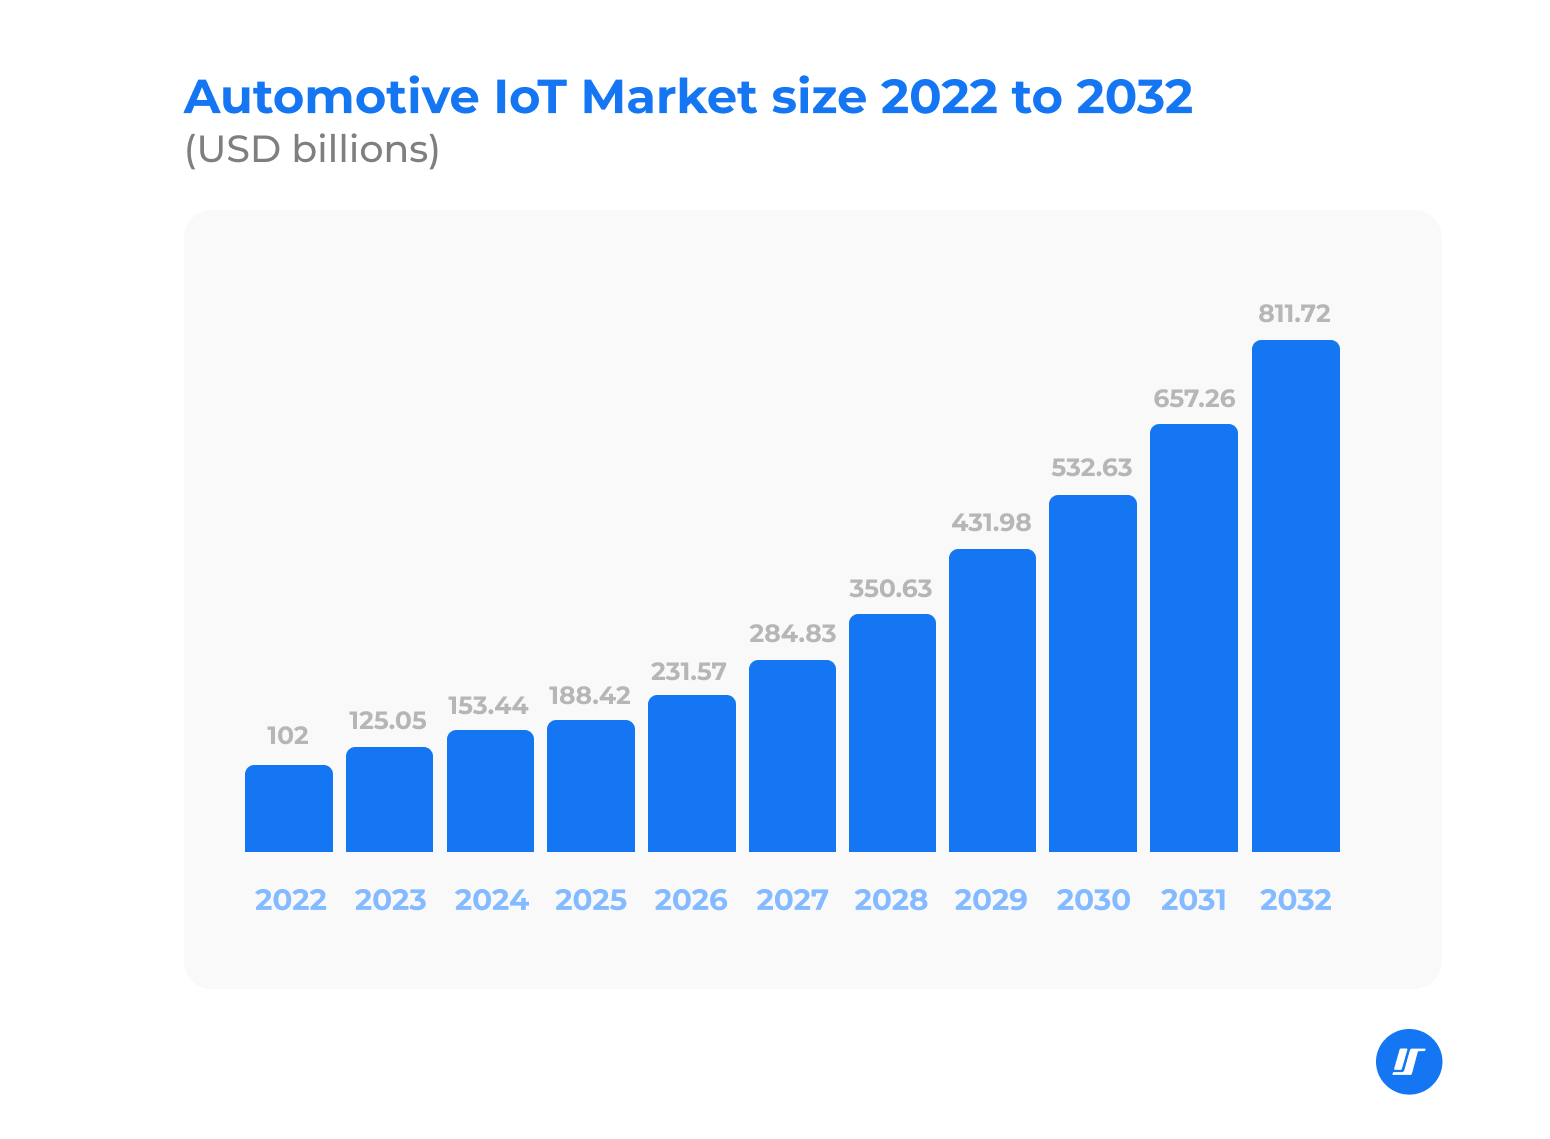 Automotive loT market size, in USD billions (2022-2032)